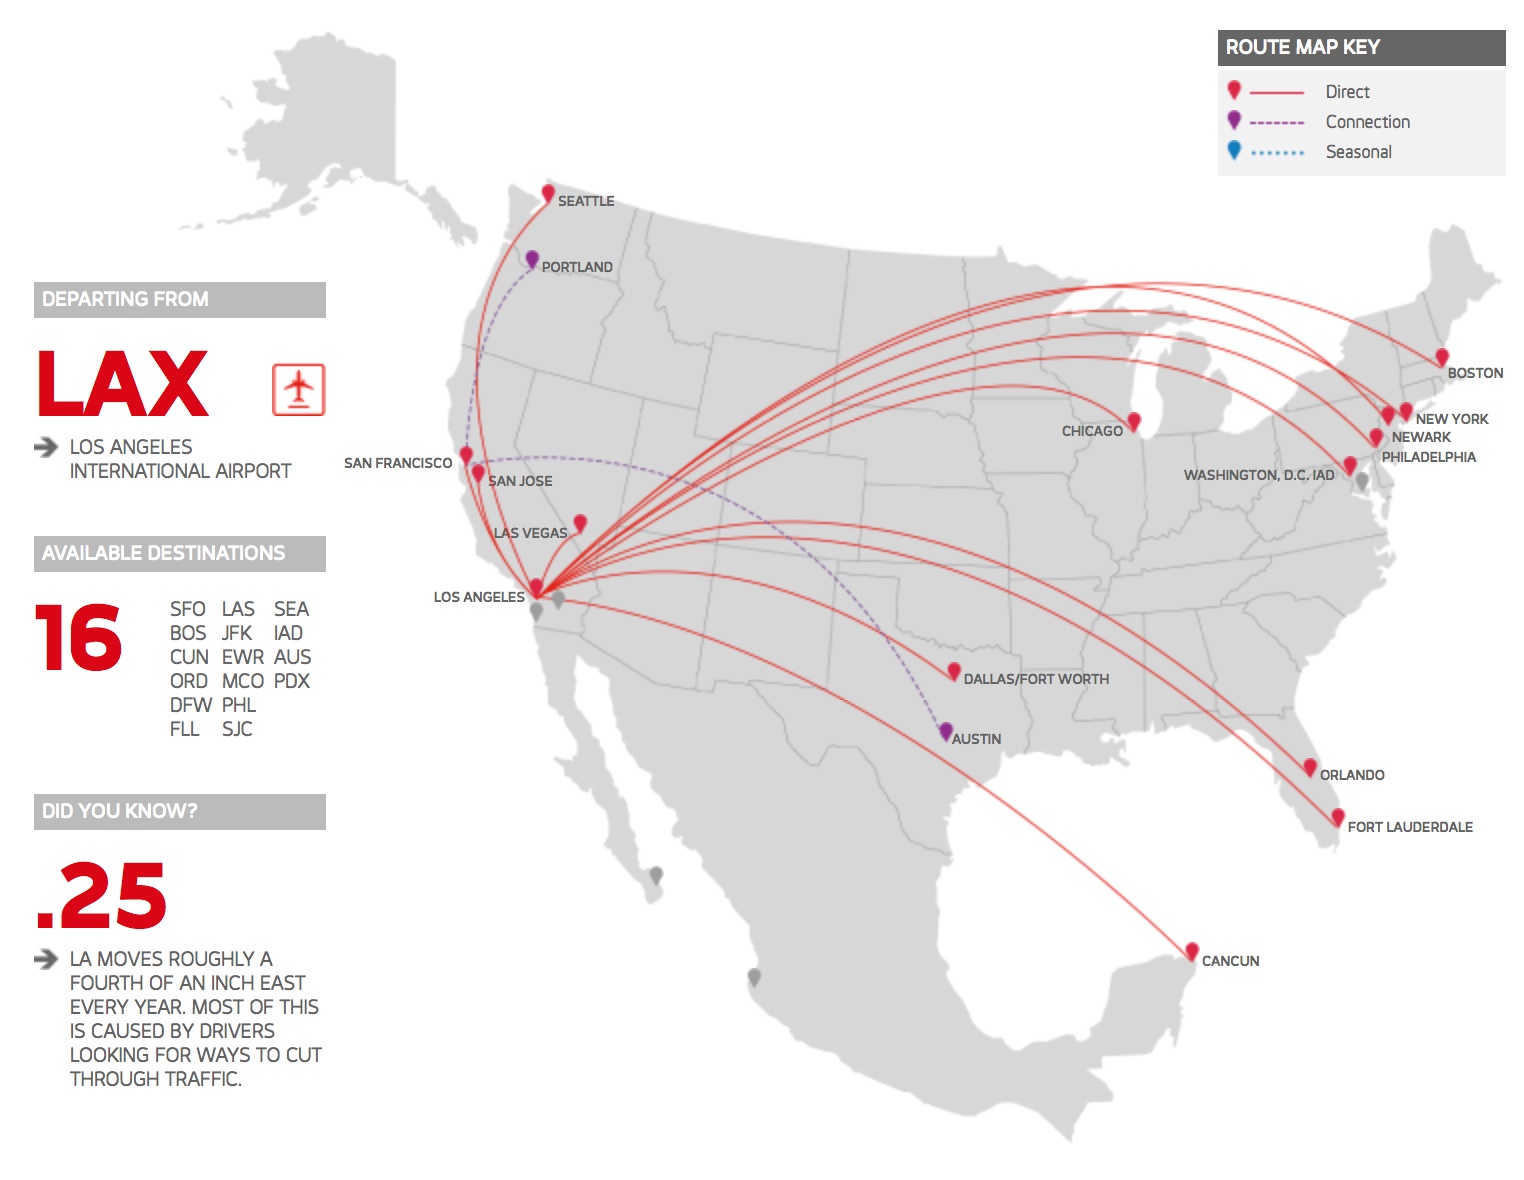 Virgin America 2.2014 LAX Route Map